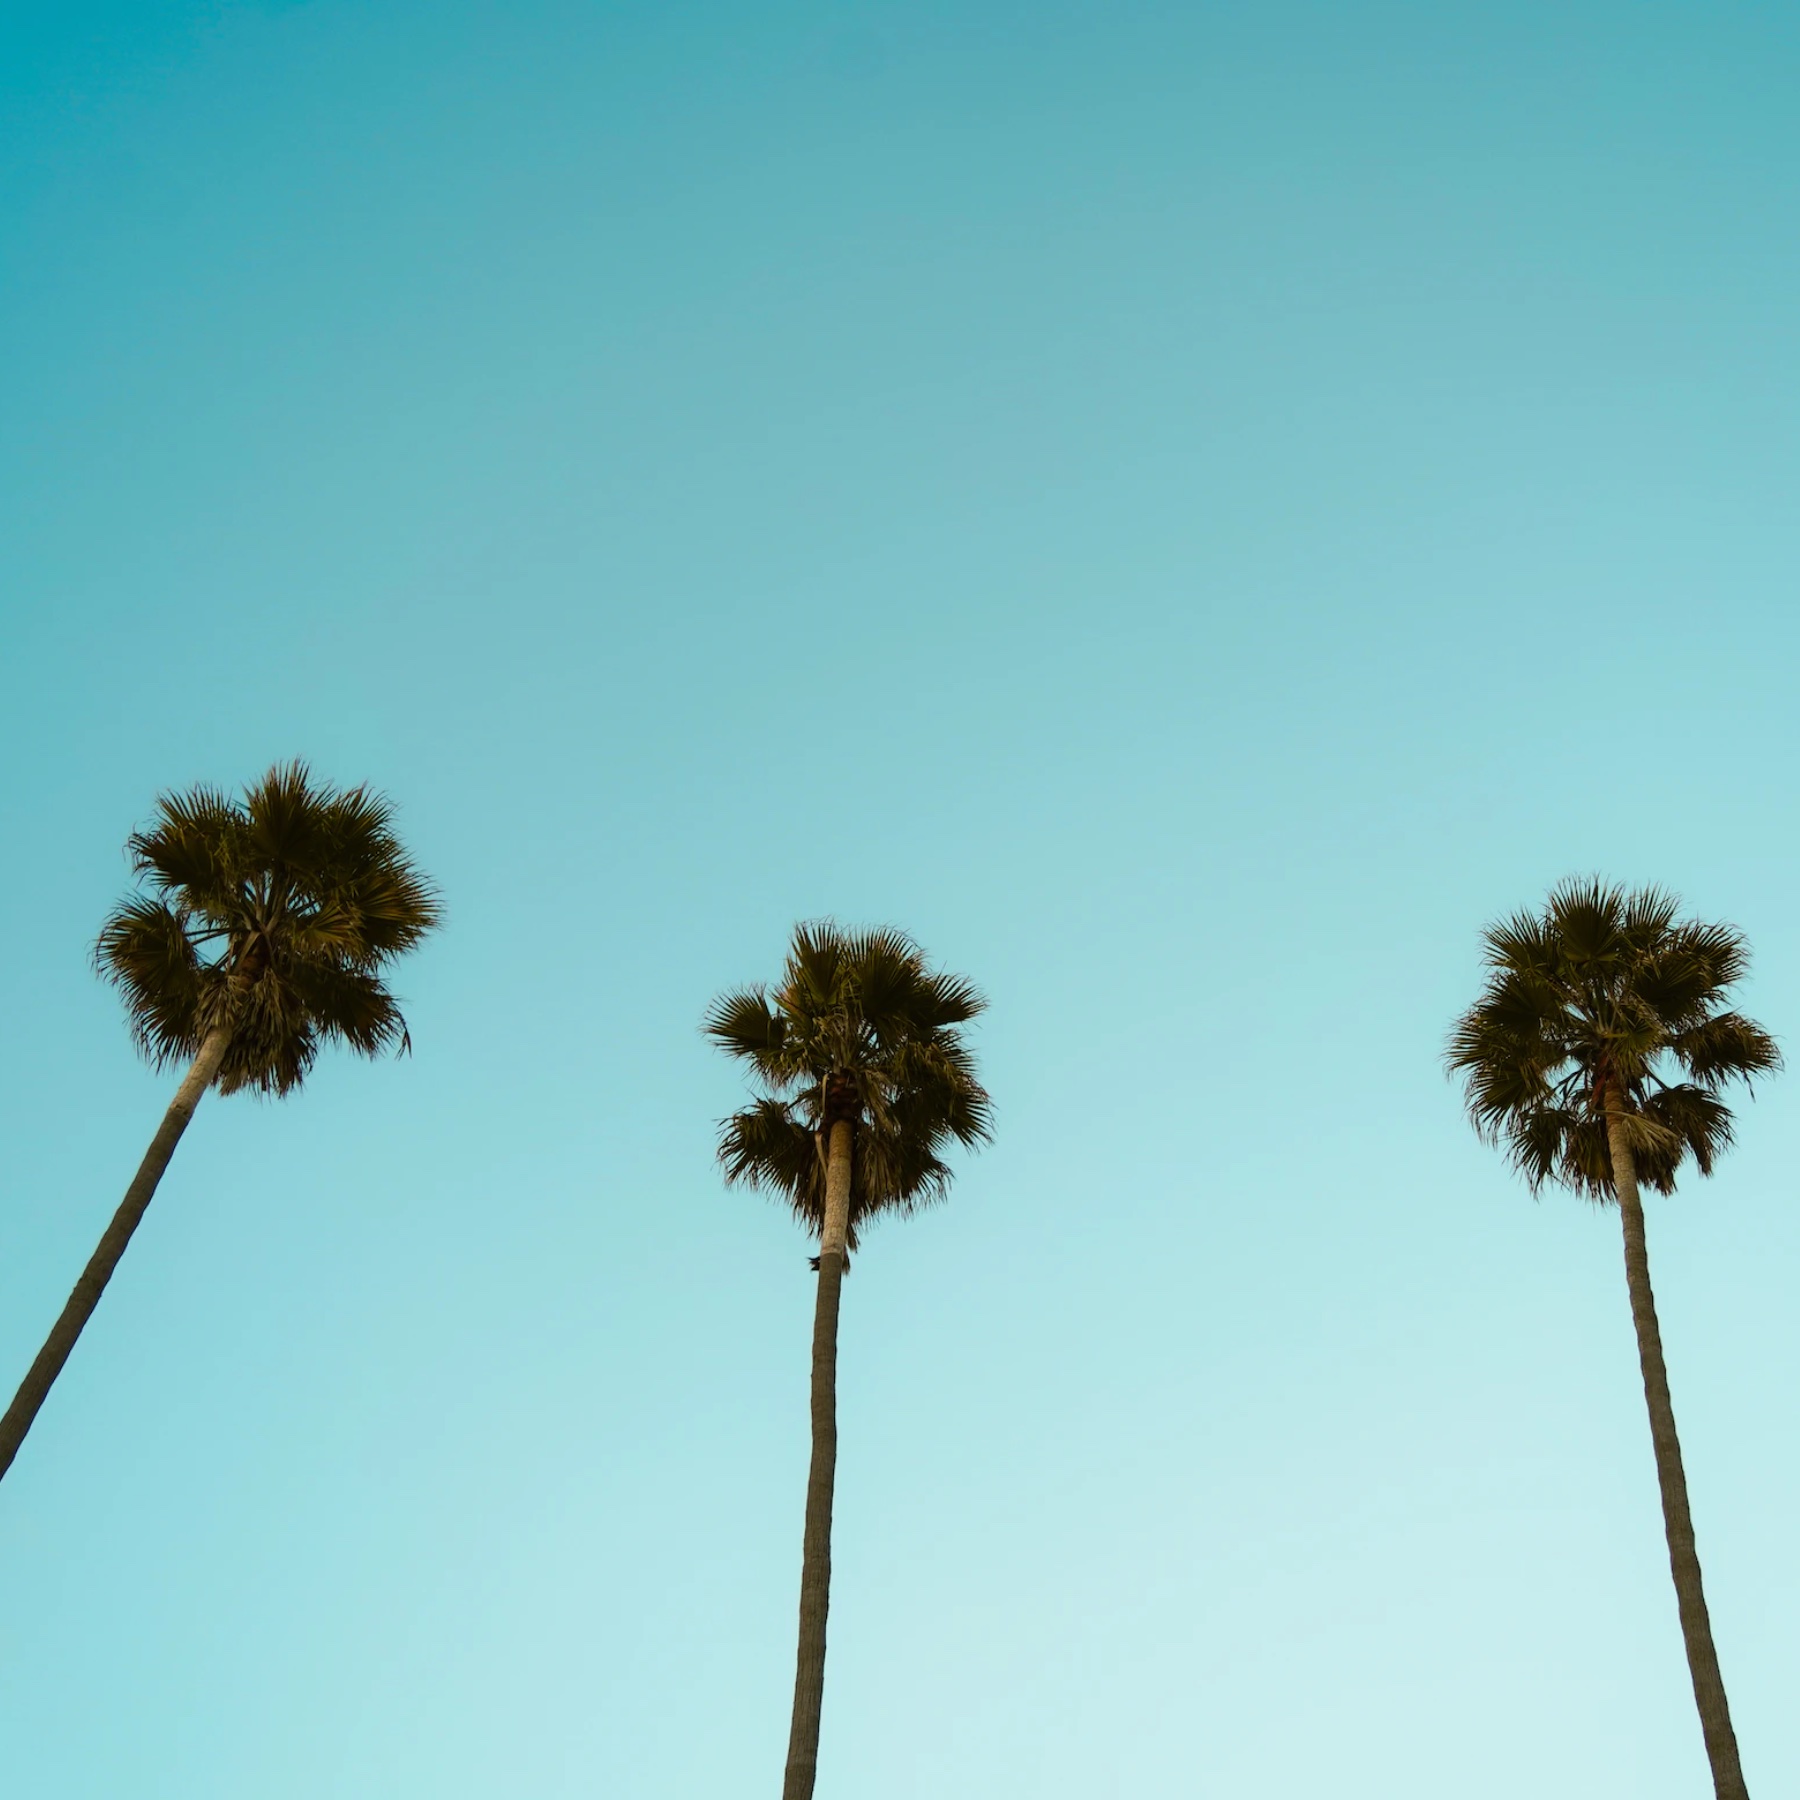 Capturing California: A Summer Break Photographic Journey